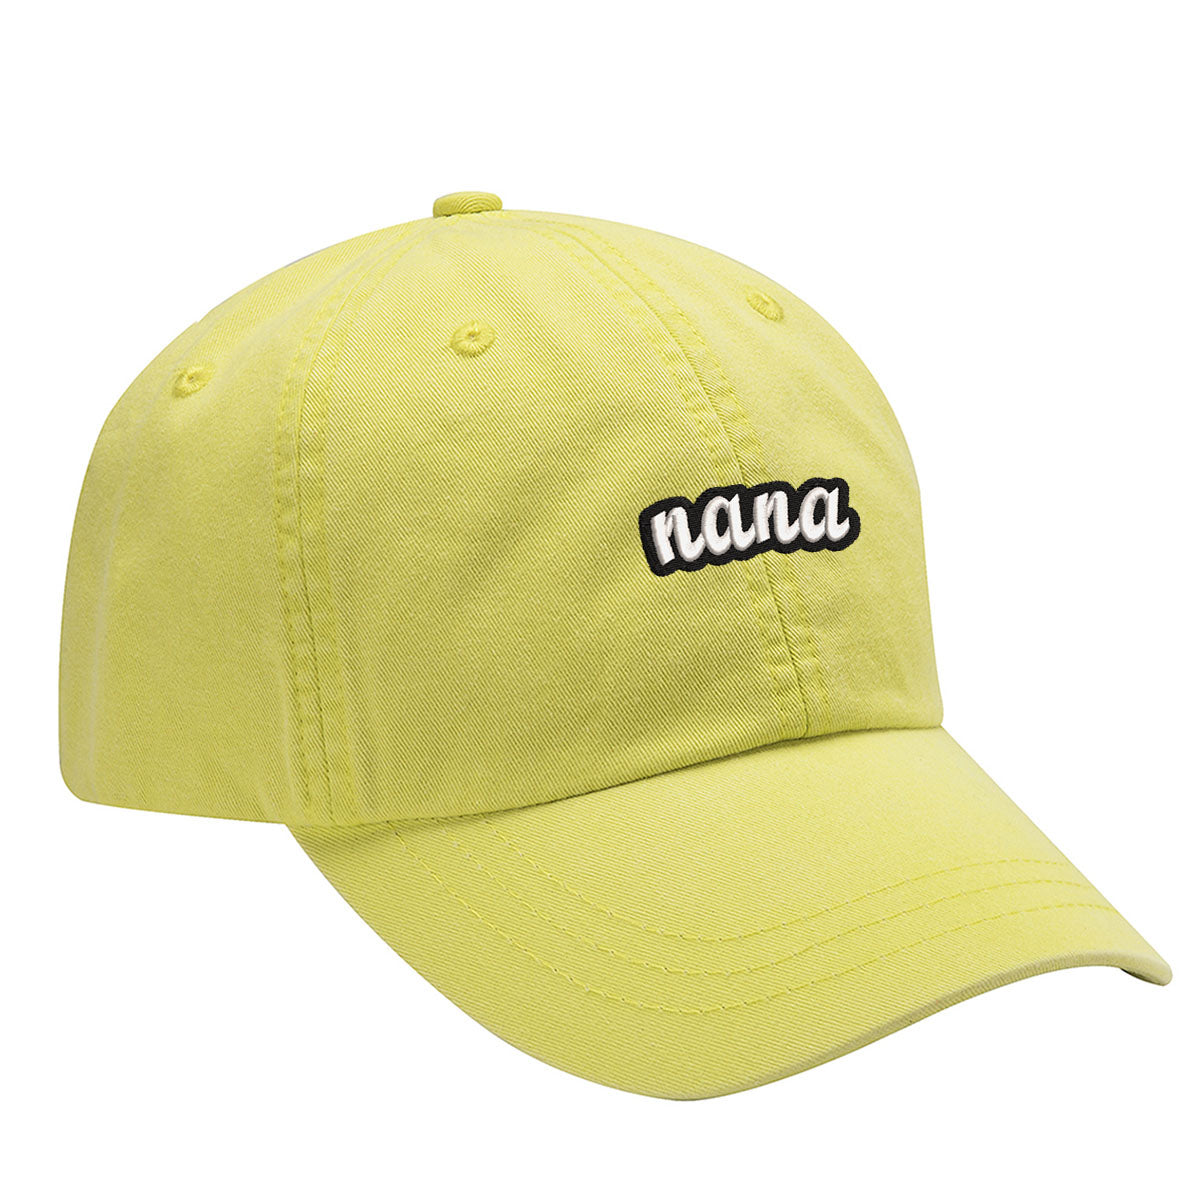 Nana Embroidered Baseball Cap